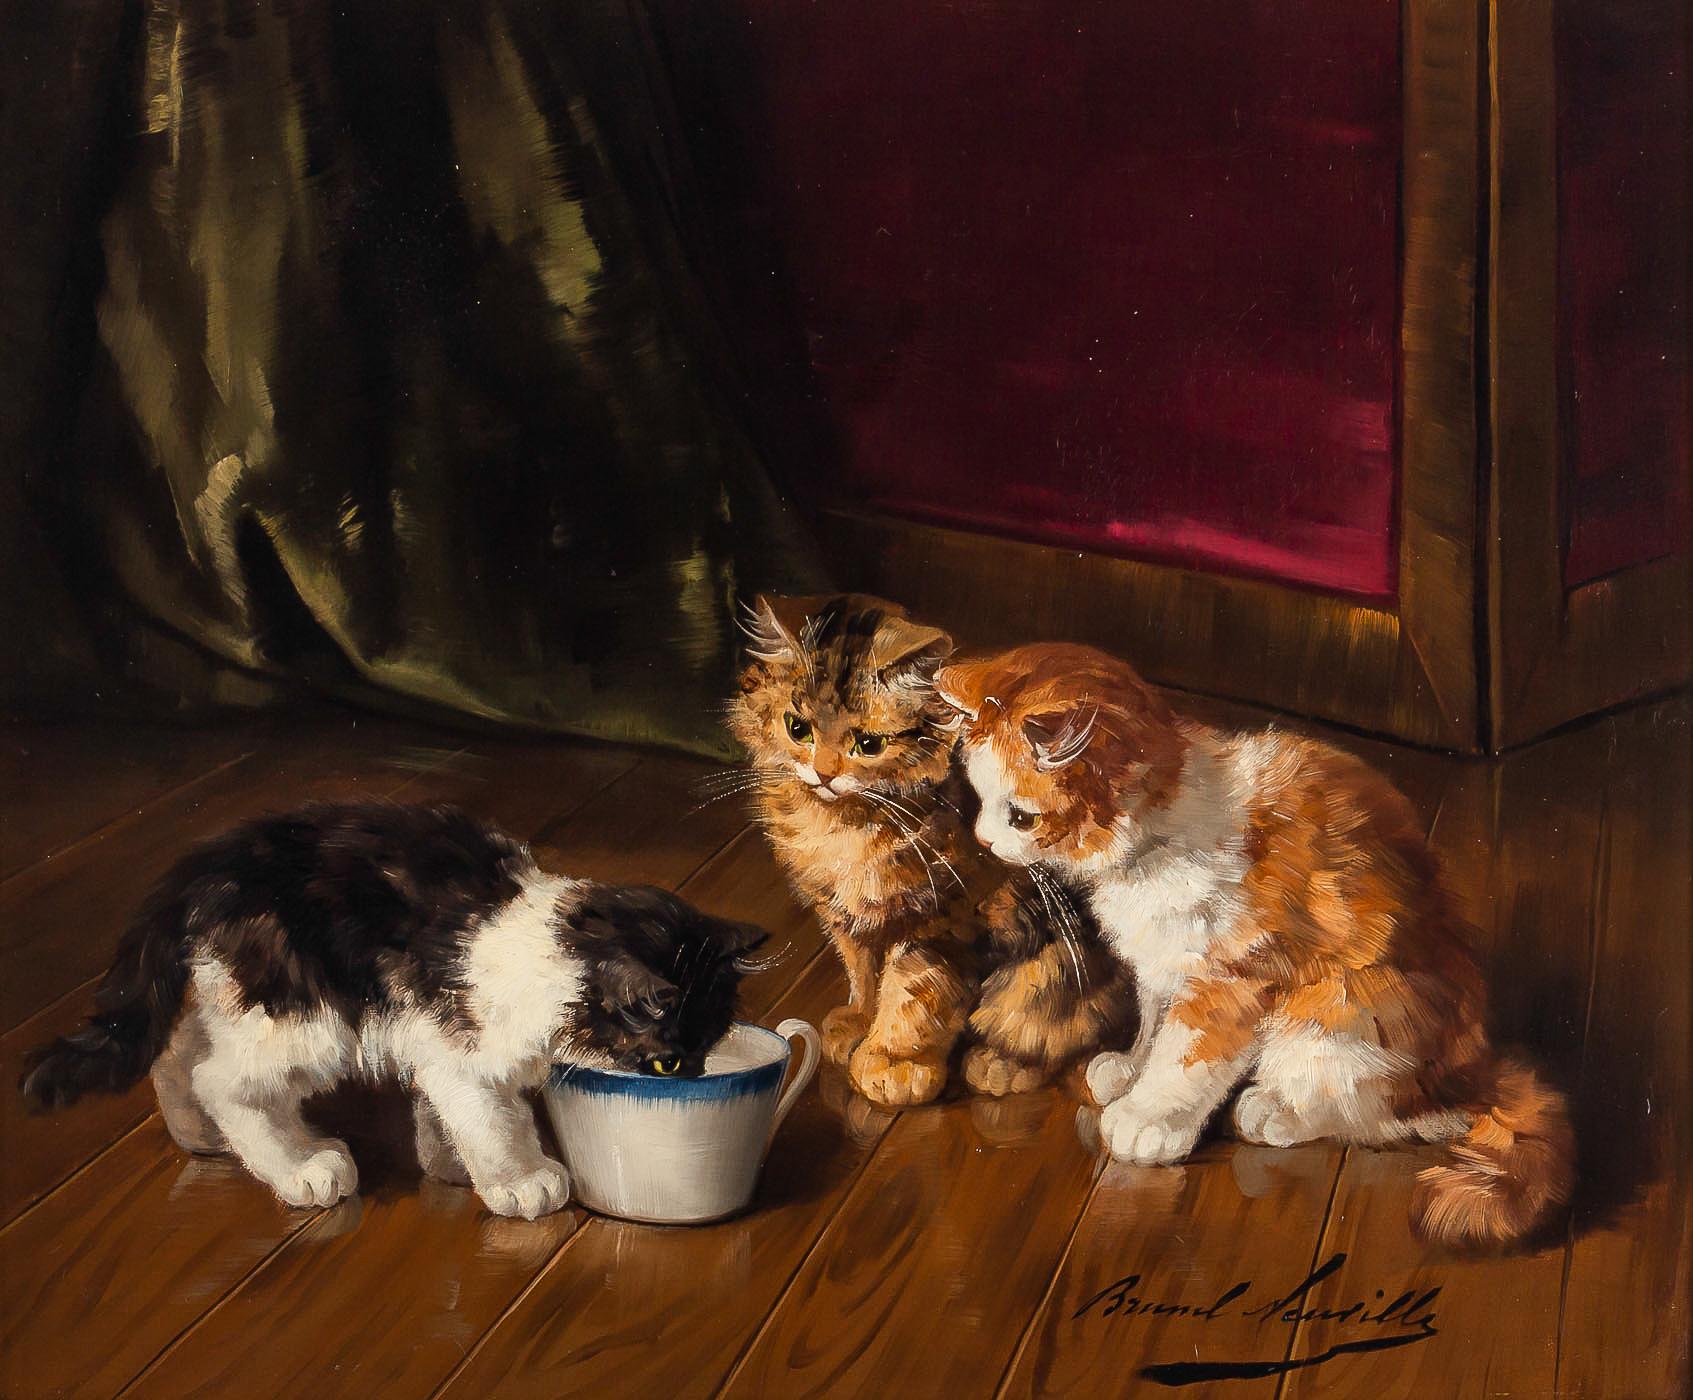 French Alfred Arthur Brunel de Neuville, Oil on Canvas, The Three Cats, circa 1880-1900